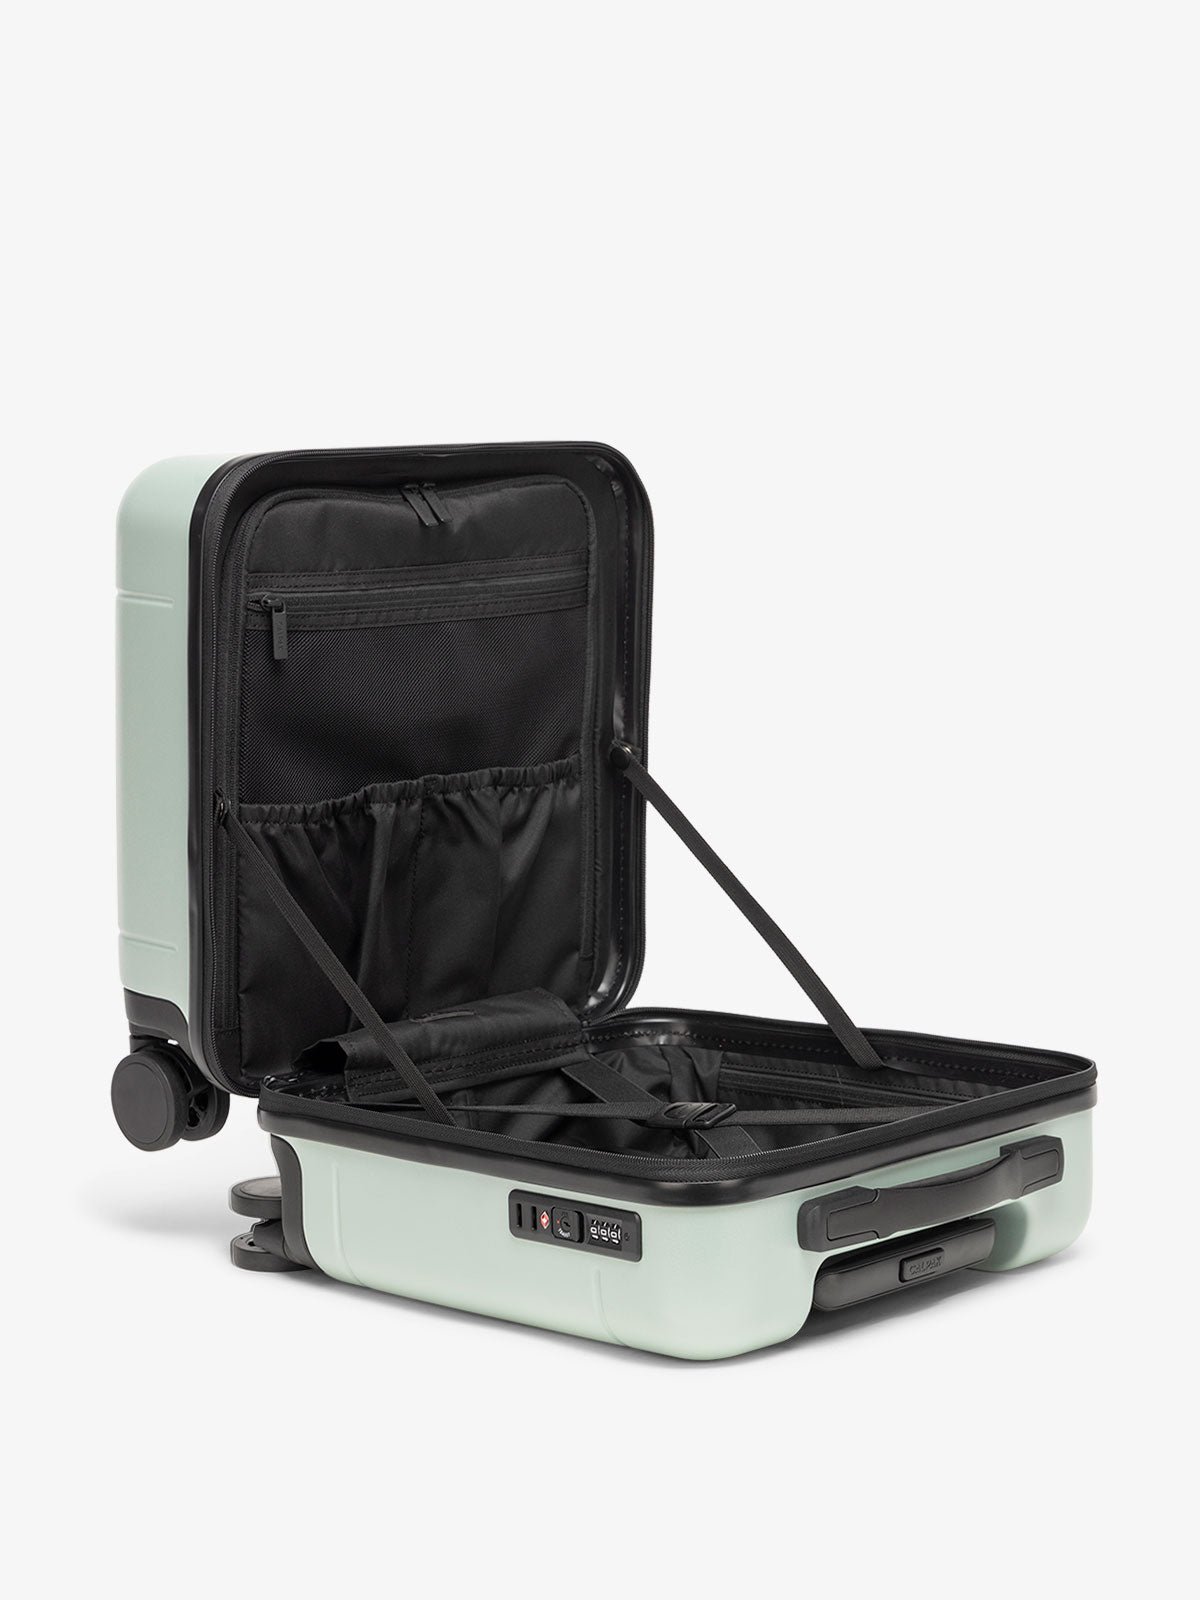 Hue mini luggage bag compartments and compression straps